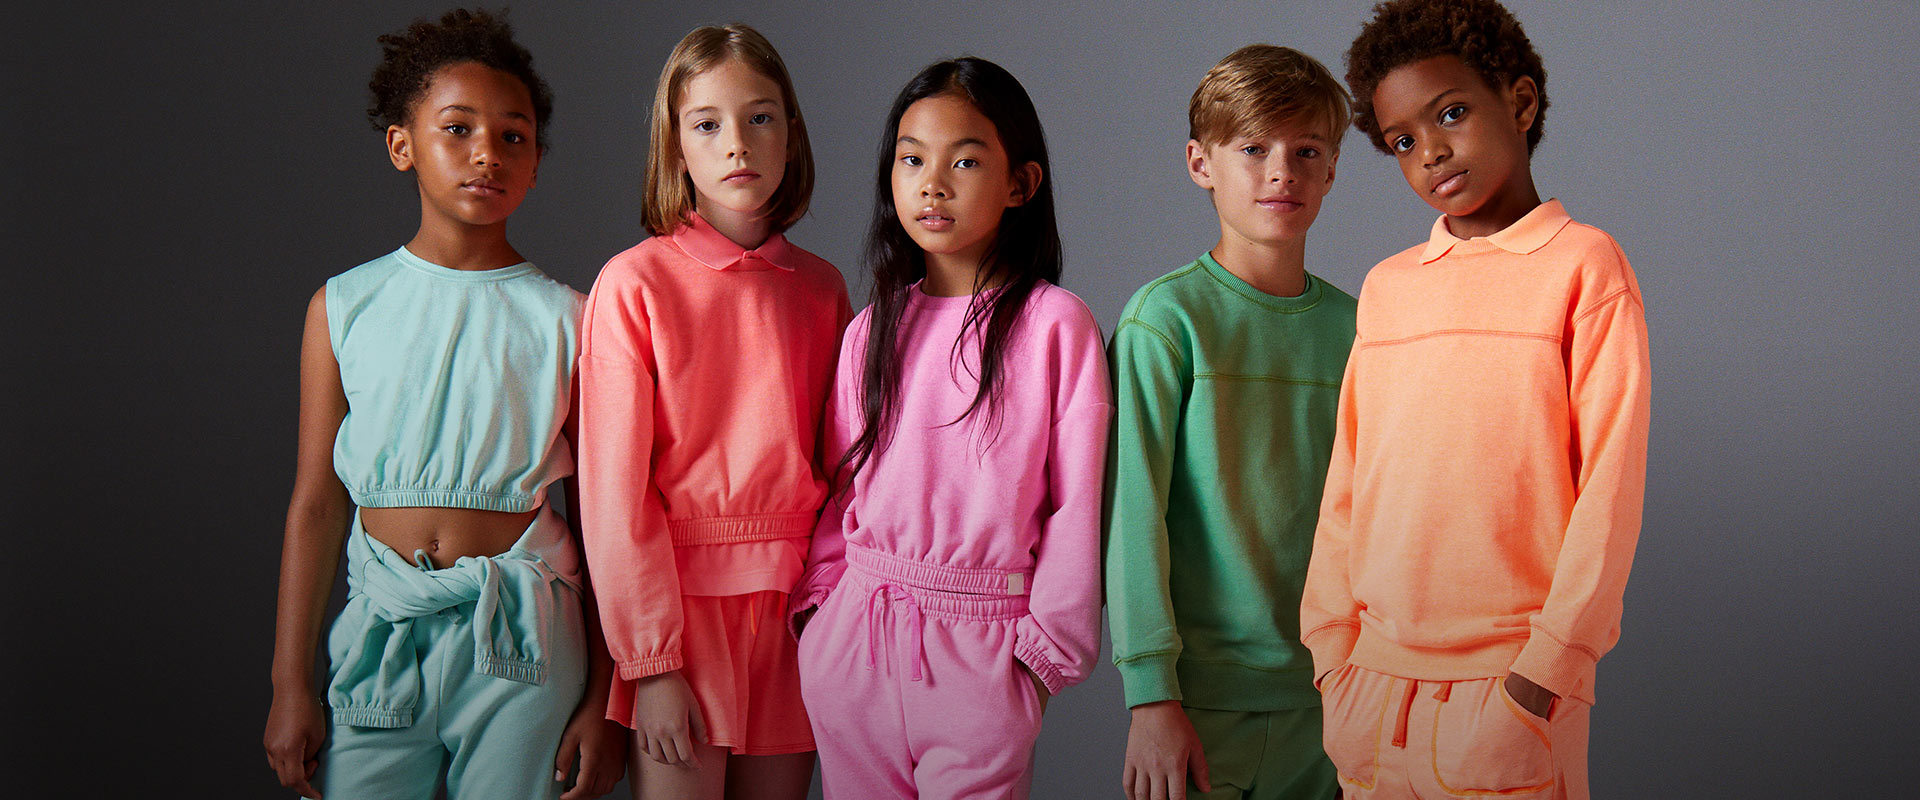 United Colors of Benetton Baby-Jungen Camicia Quadri Check Freizeithemd